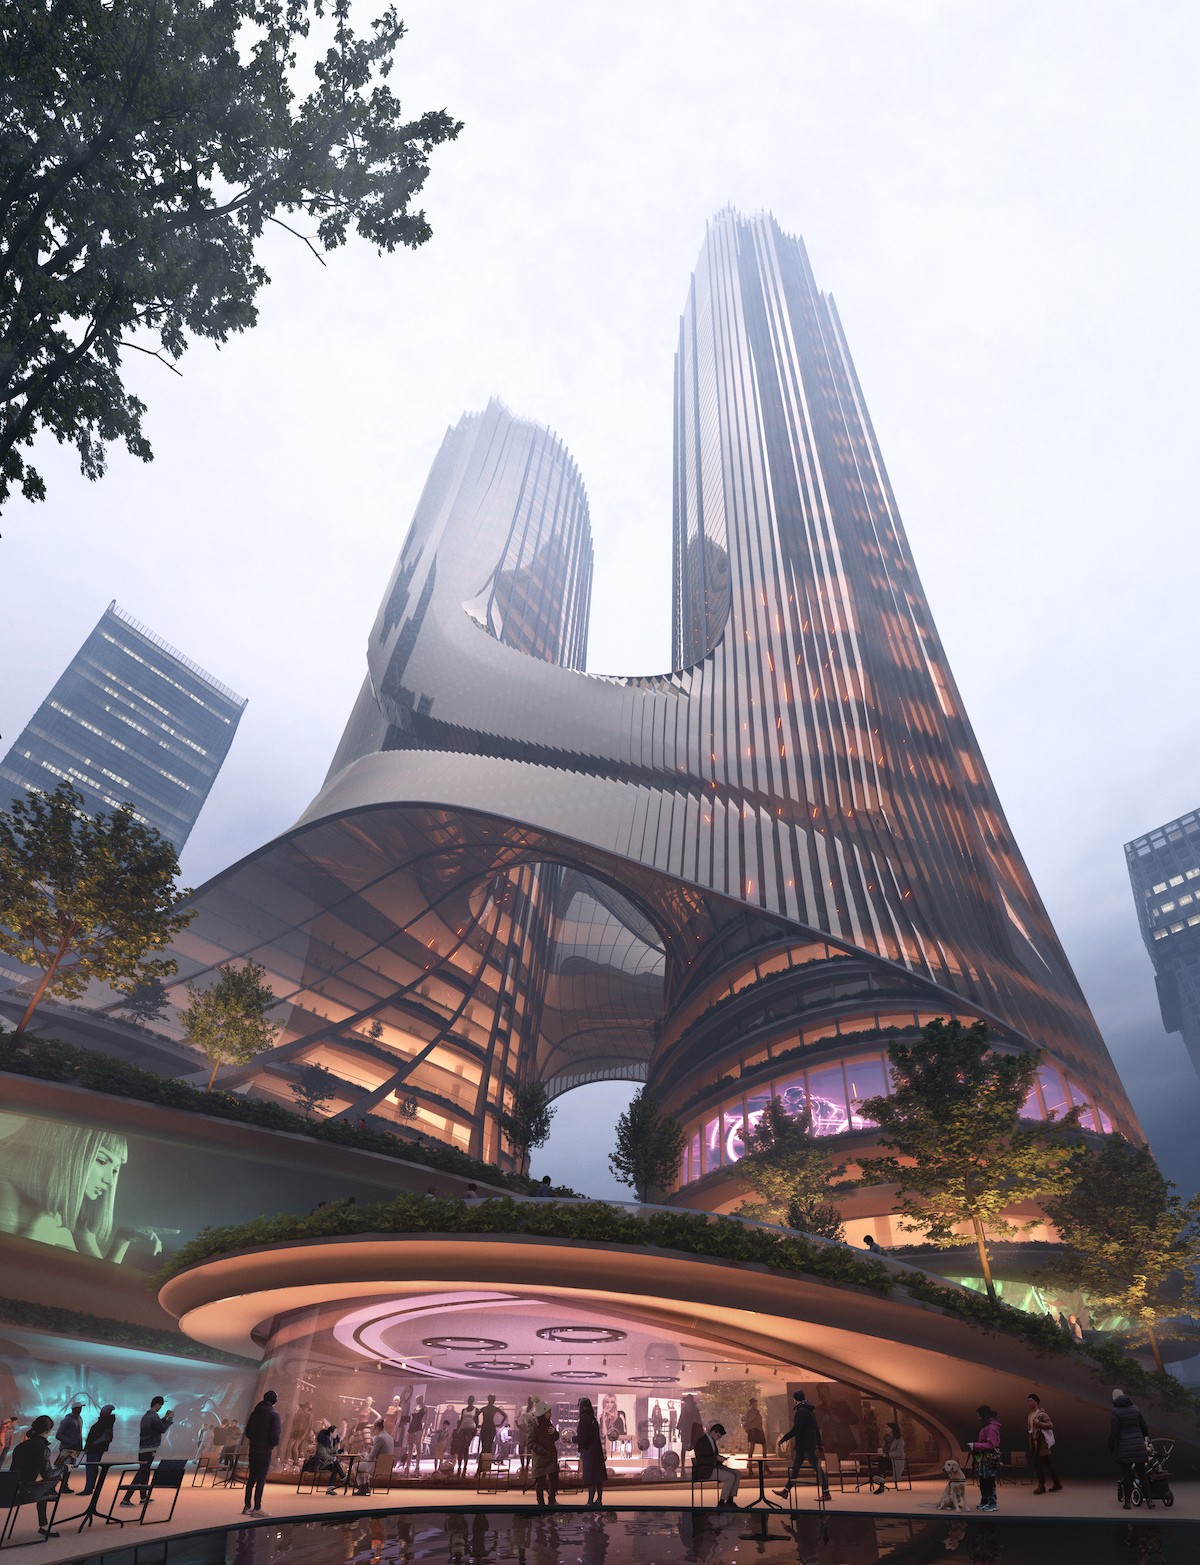 Zaha Hadid Architects projeta par de arranha-céus futuristas unidos por um terraço verde na China (Foto: Zaha Hadid Architects)